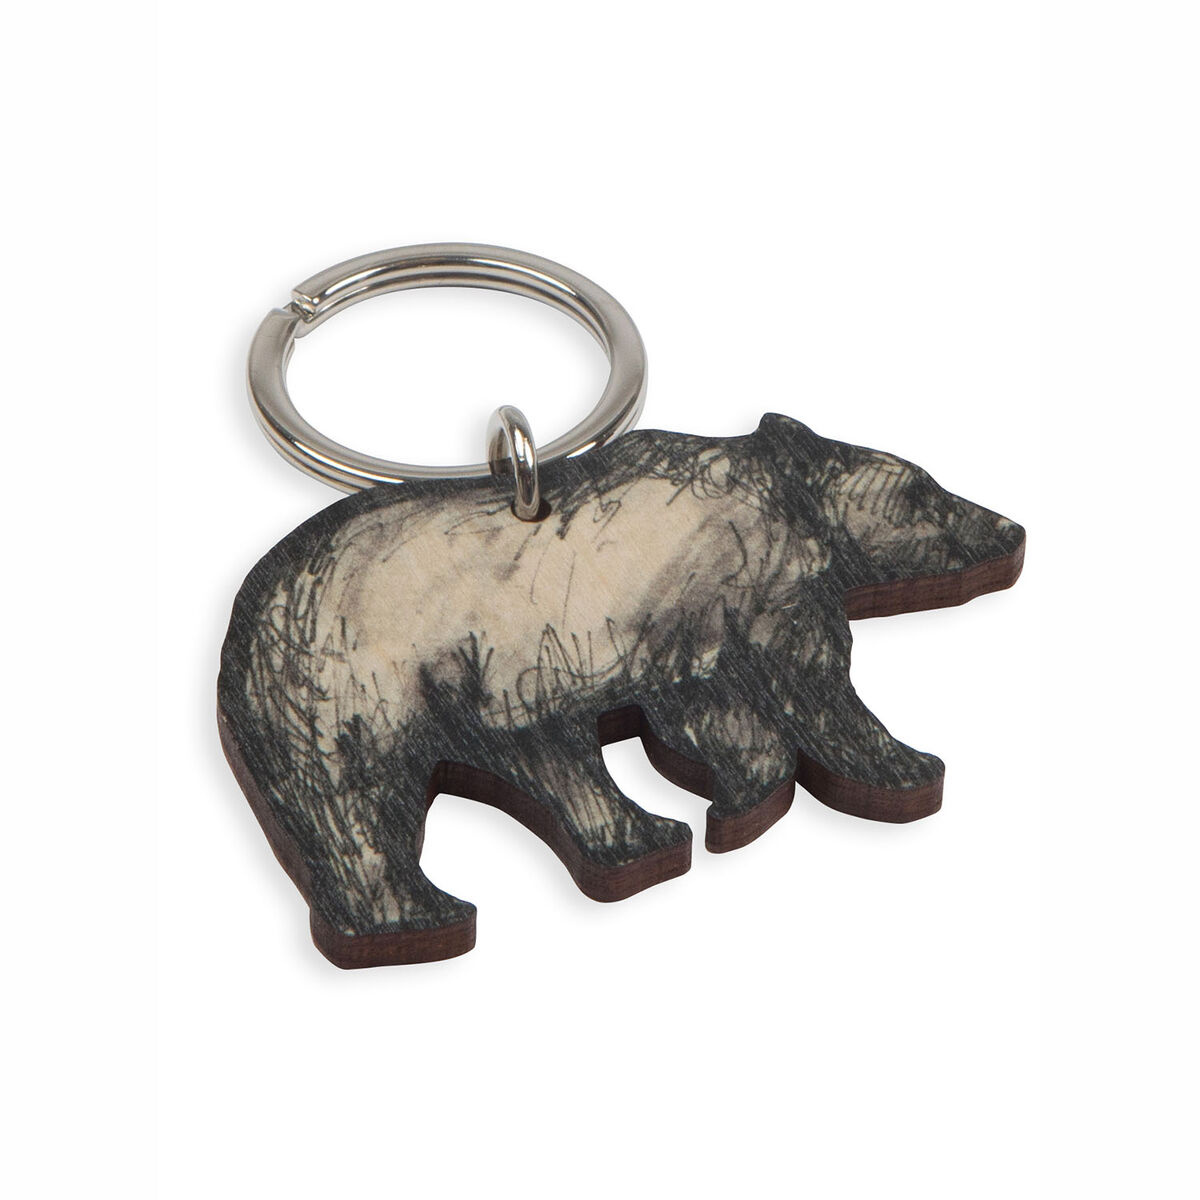 MIIKO DESIGN Wooden Keychain "Bear" 4.5 x 7 cm